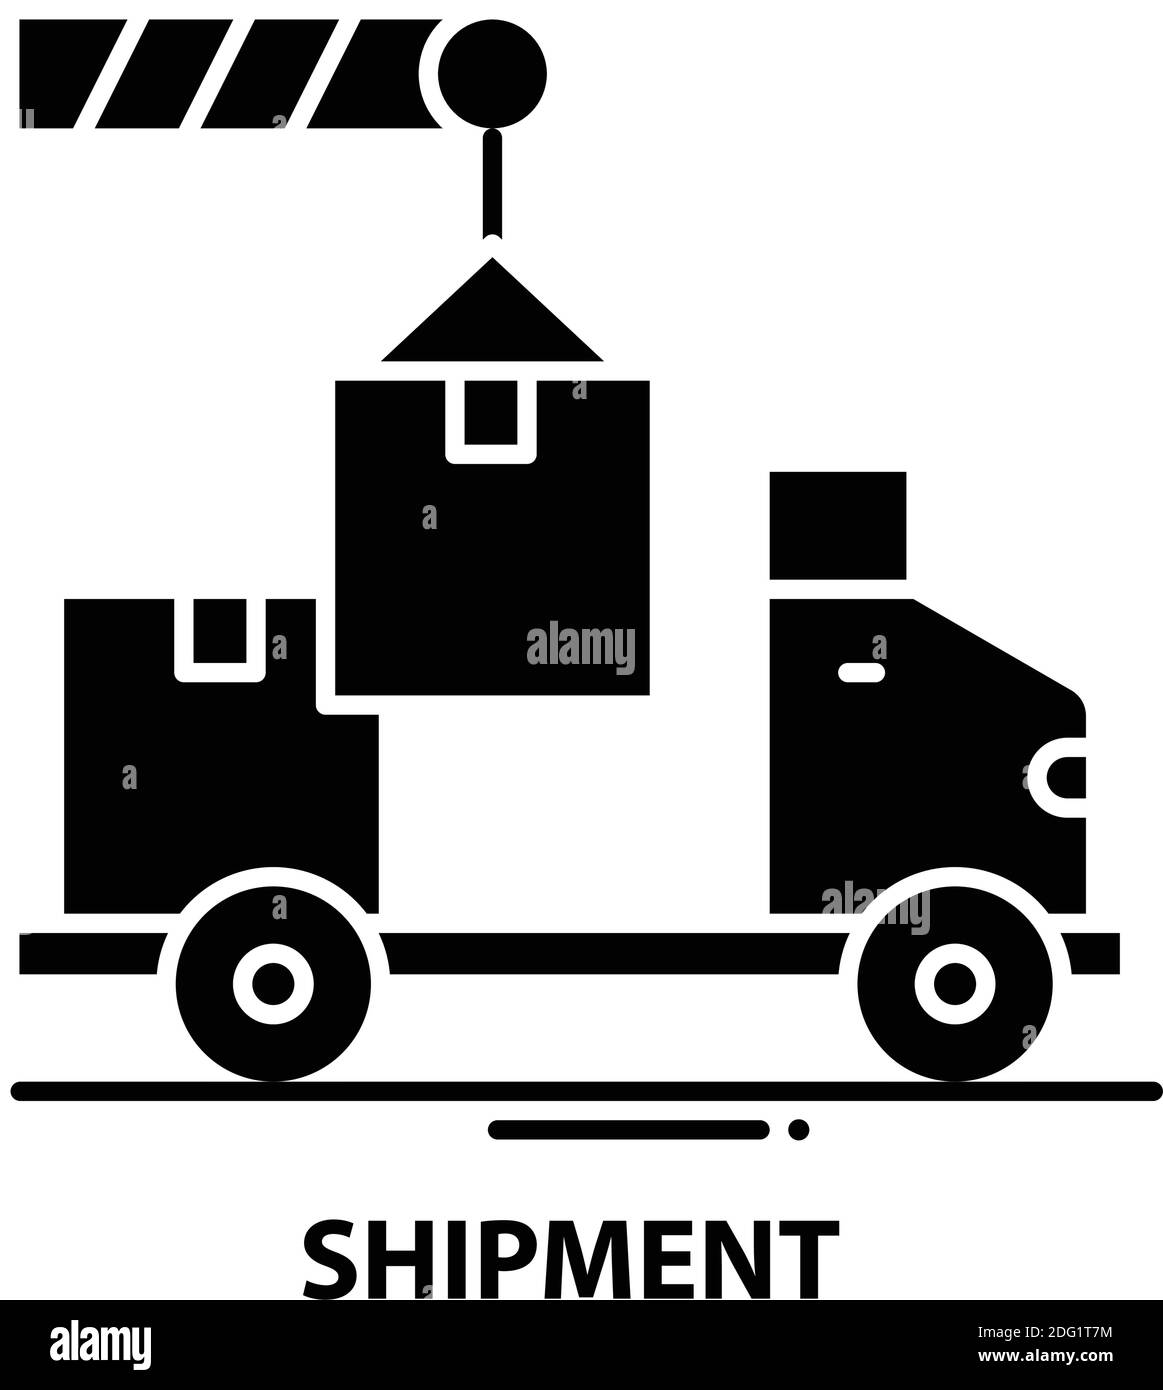 shipment icon, black vector sign with editable strokes, concept illustration Stock Vector